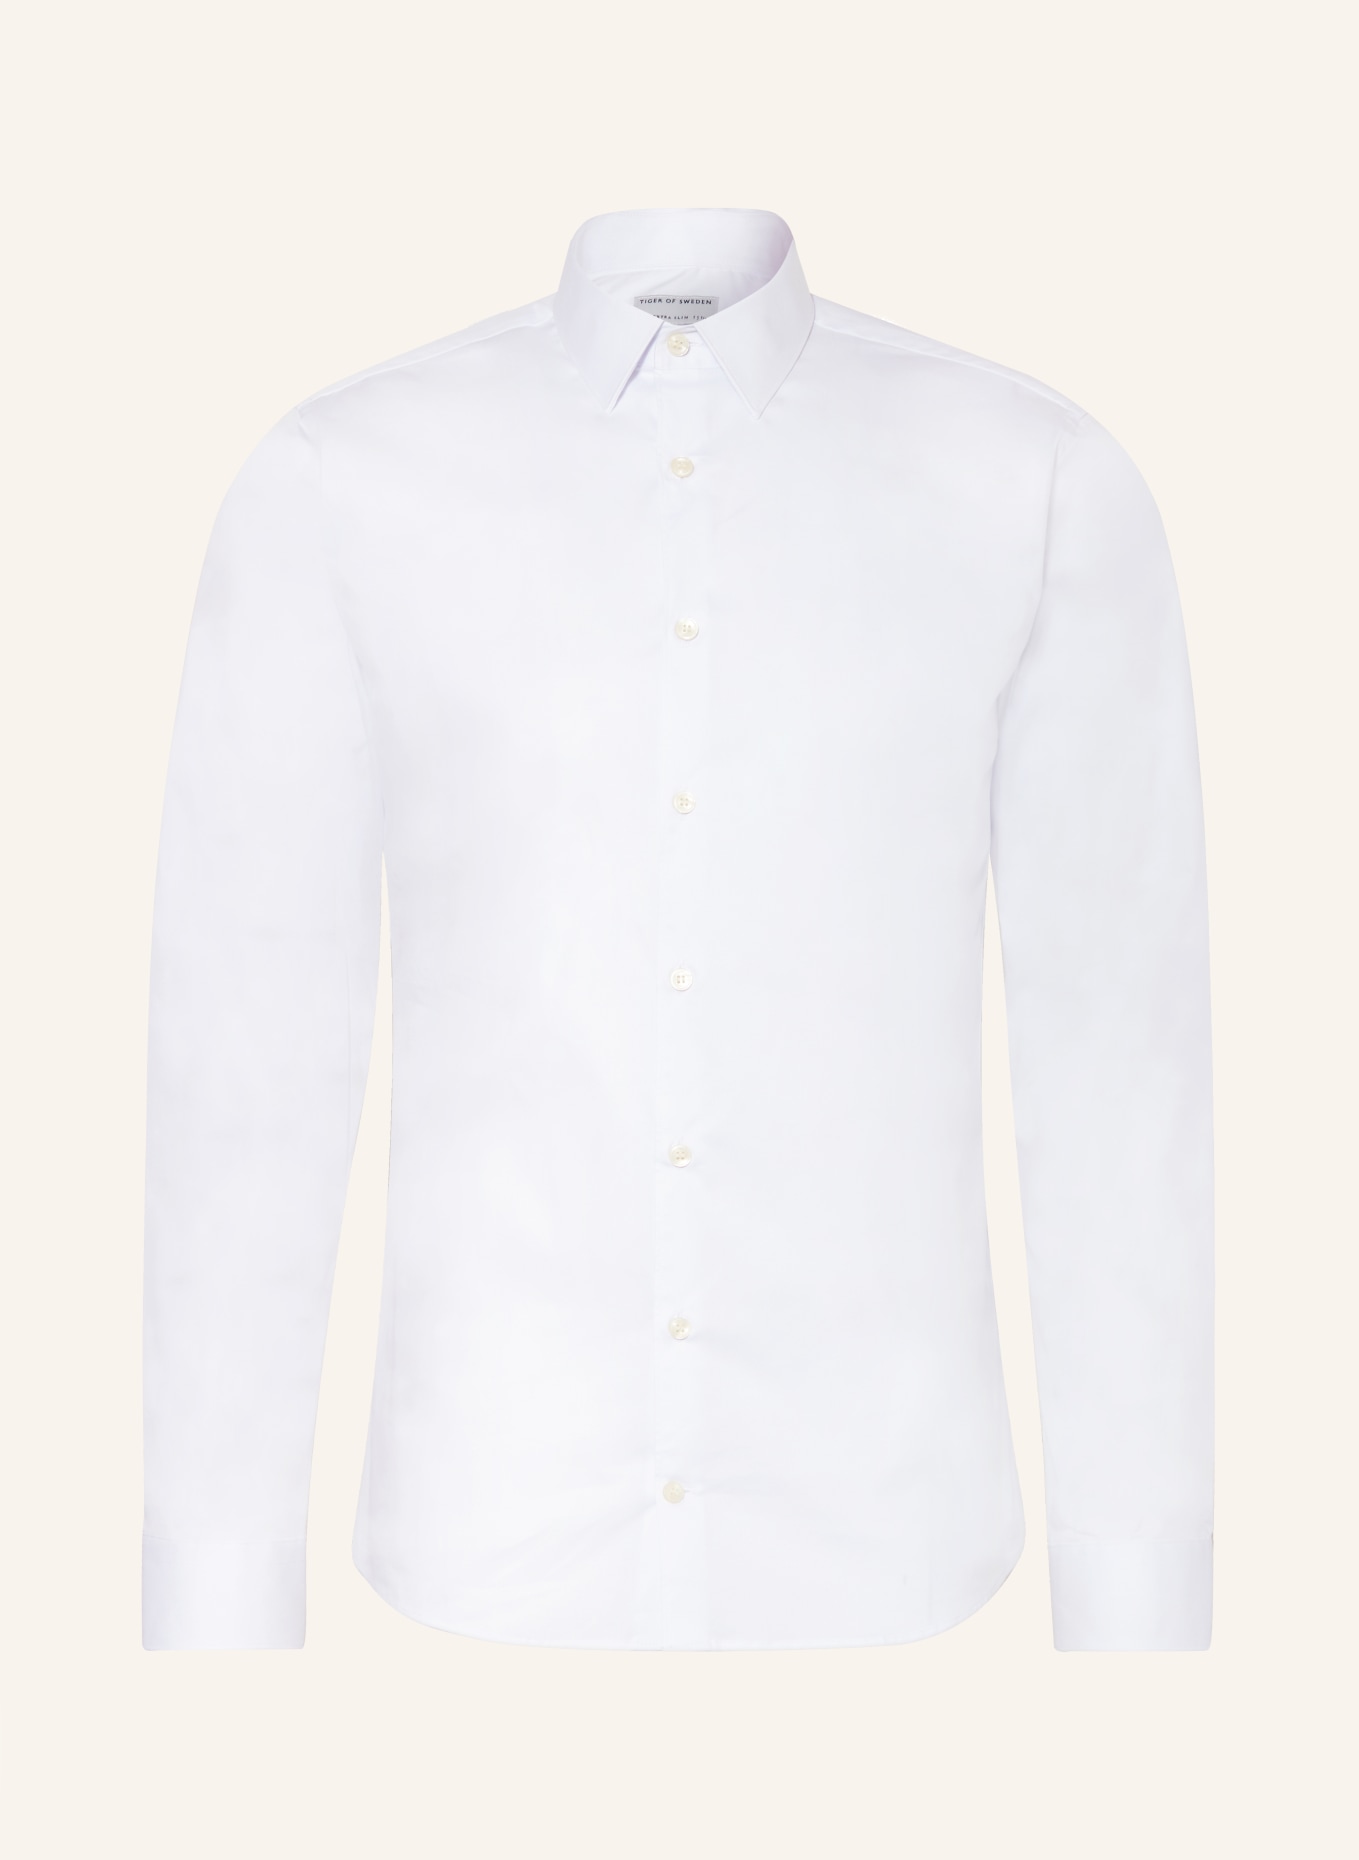 TIGER OF SWEDEN Hemd FILBRODIE Extra Slim Fit, Farbe: WEISS (Bild 1)